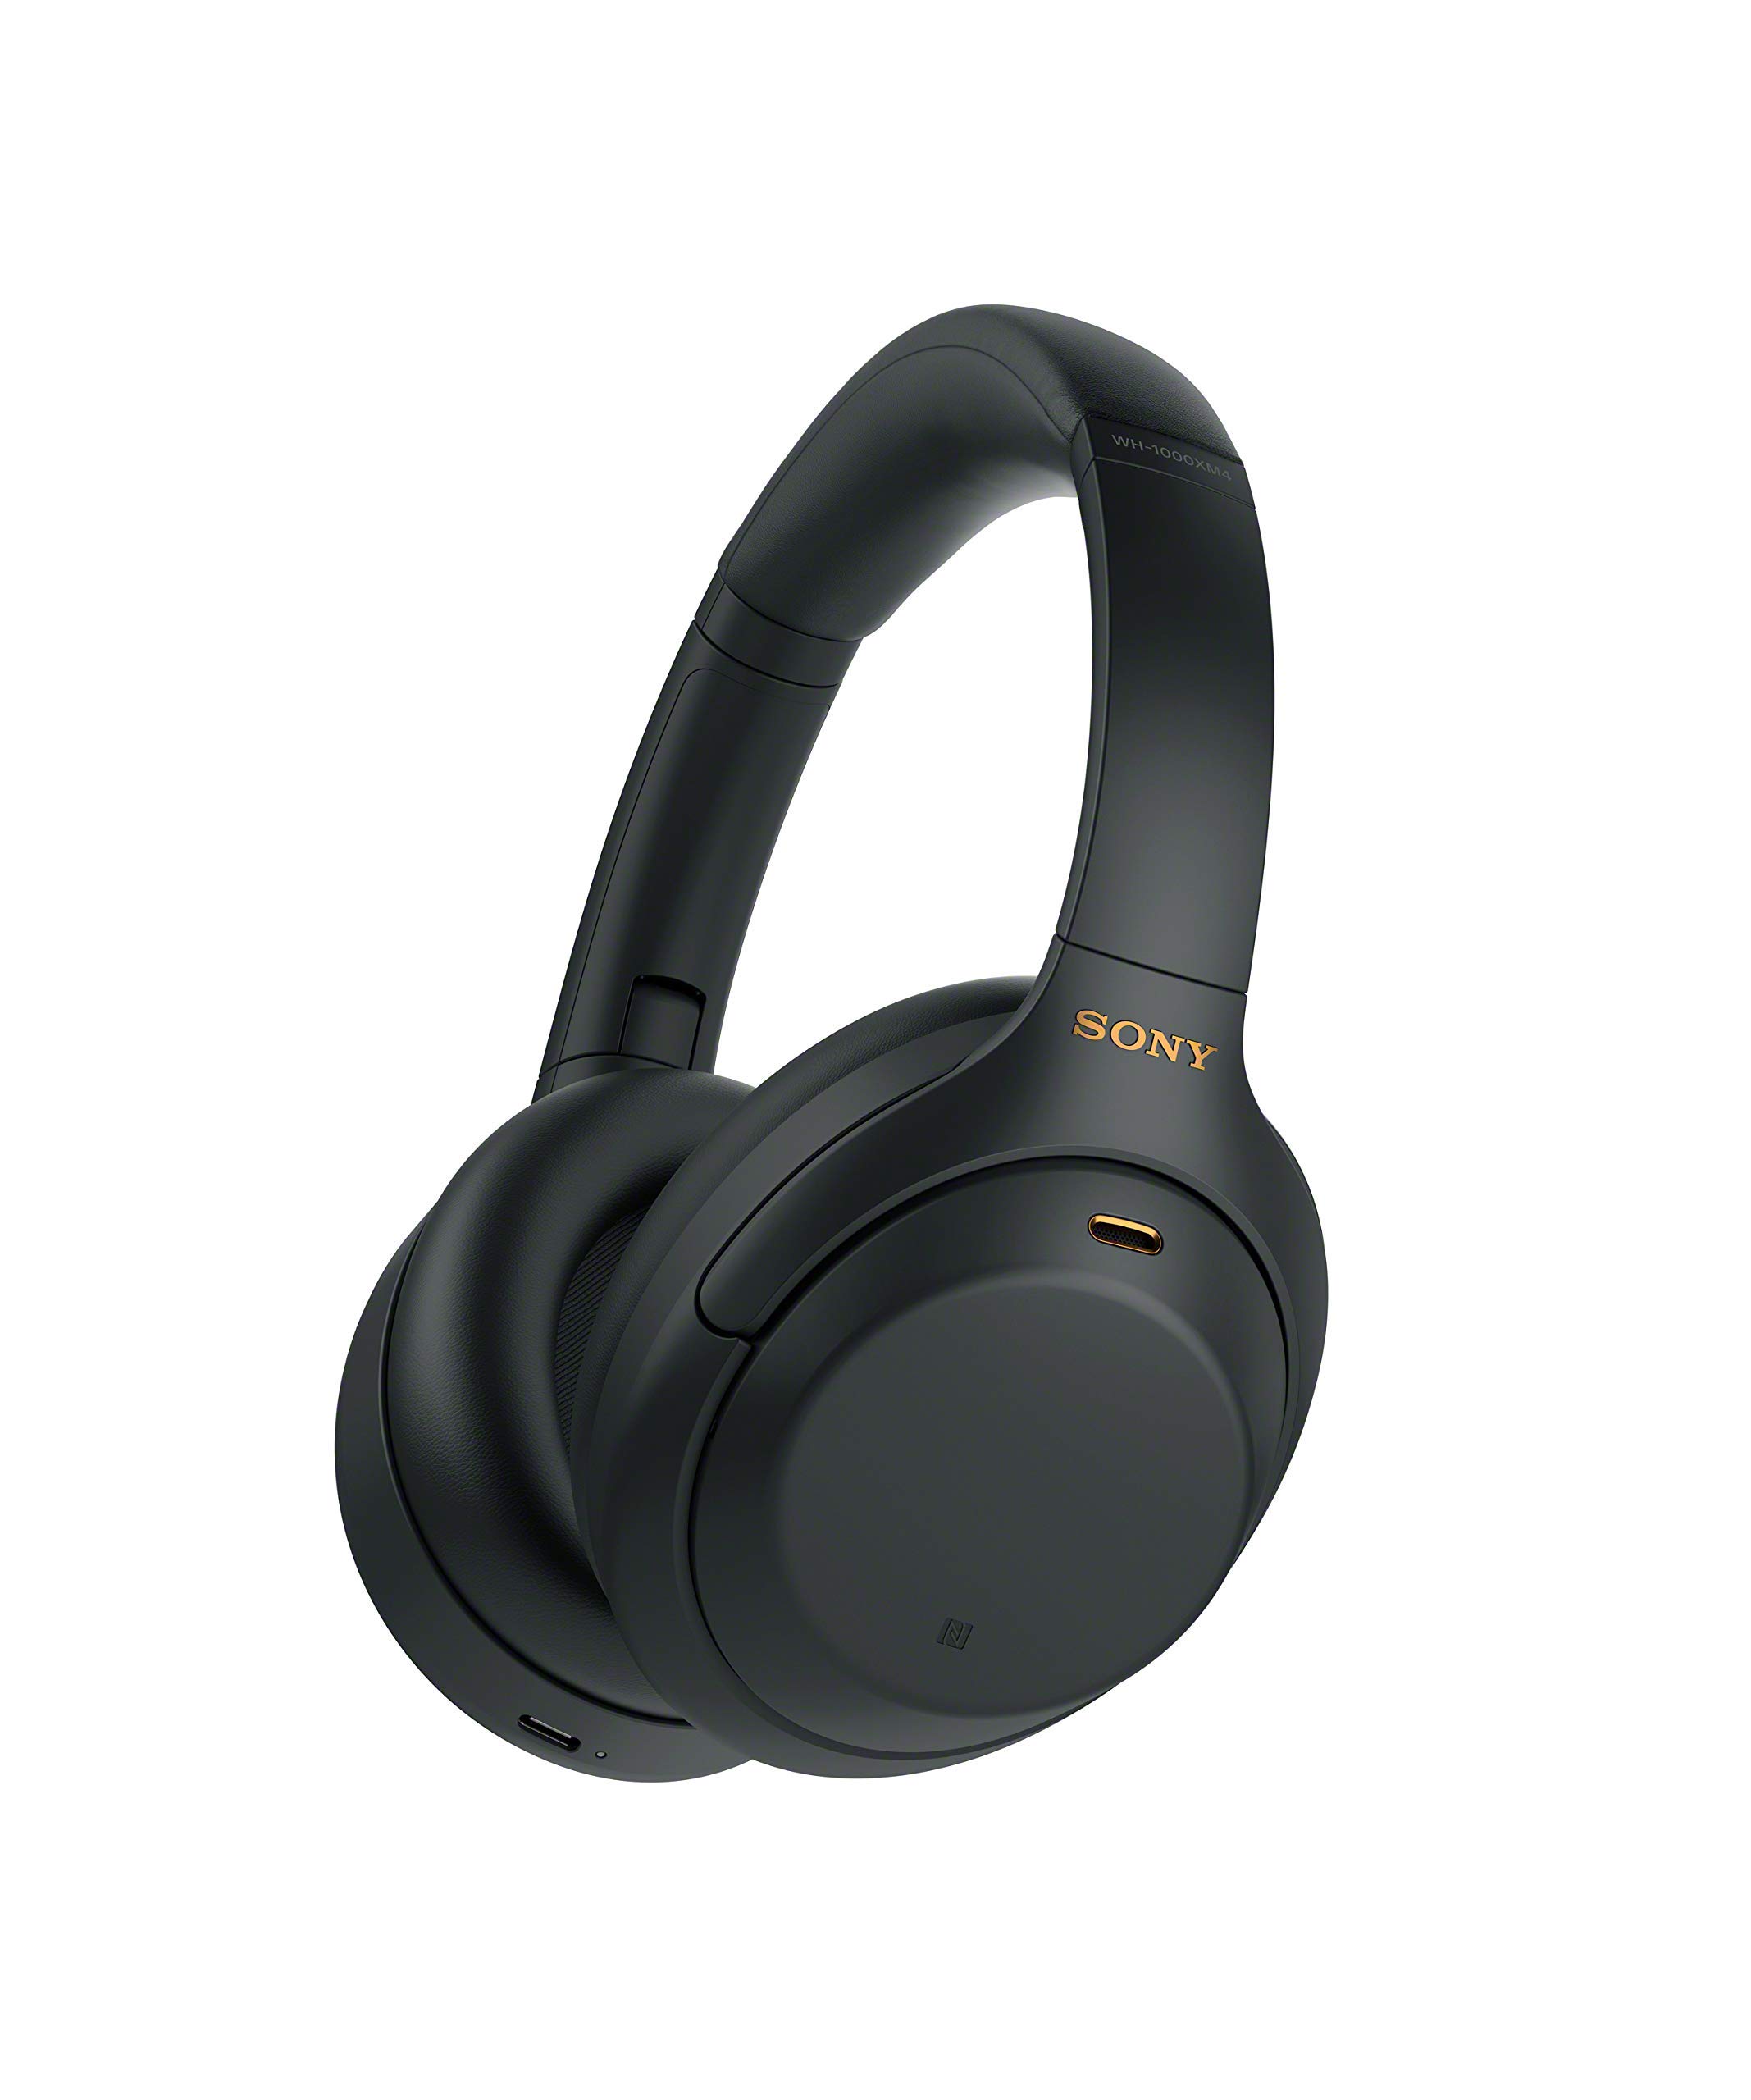 Sony WH-1000XM4 سماعات رأس لاسلكية مانعة للتشويش - أسود (مجدد)